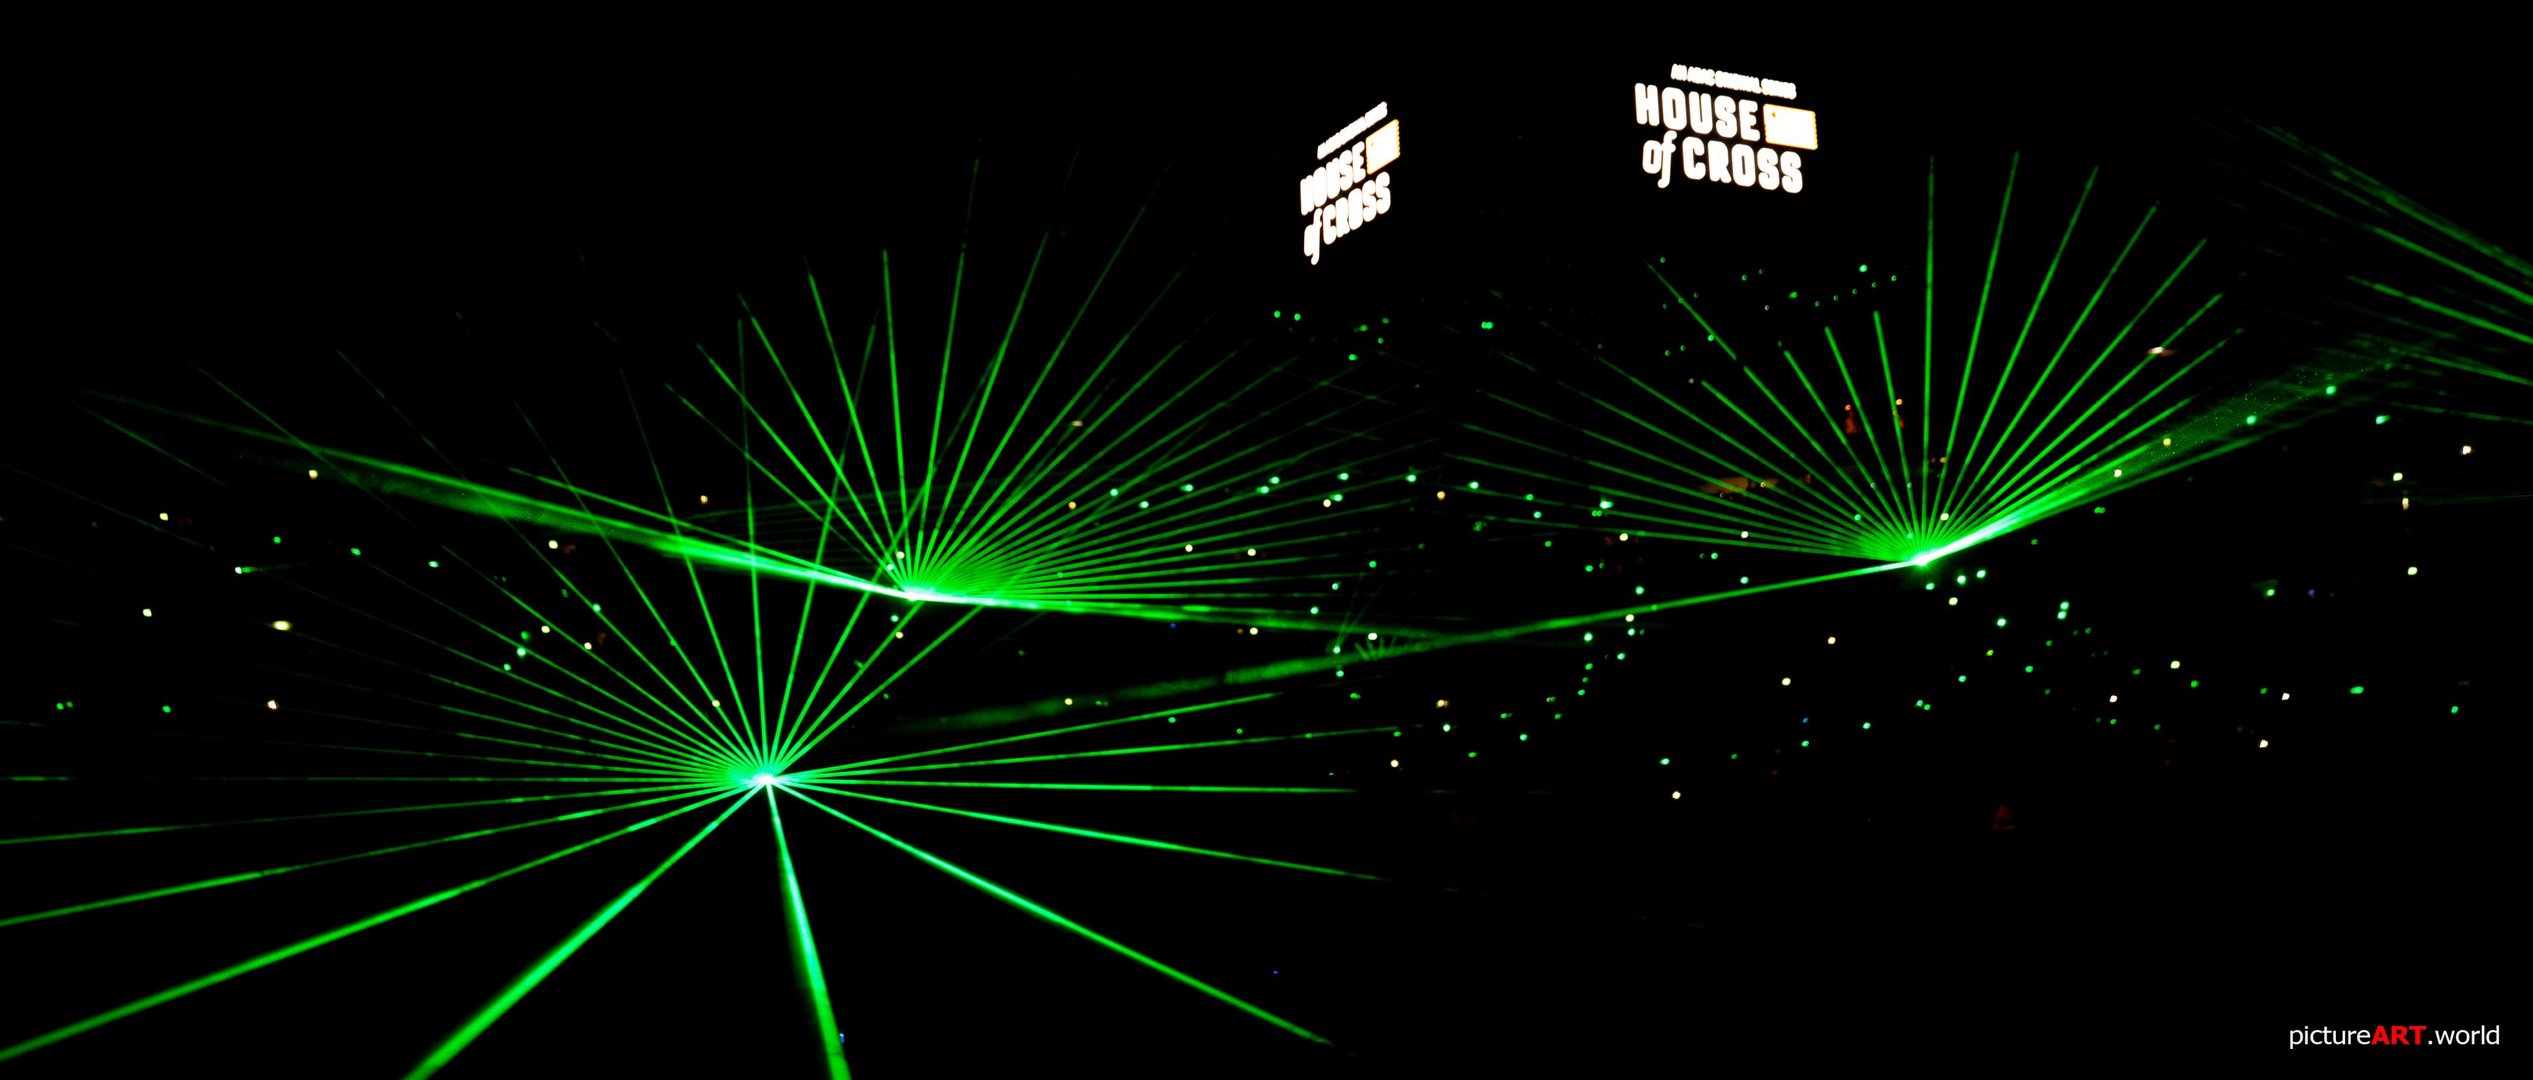 Supercross Dortmund Lasershow